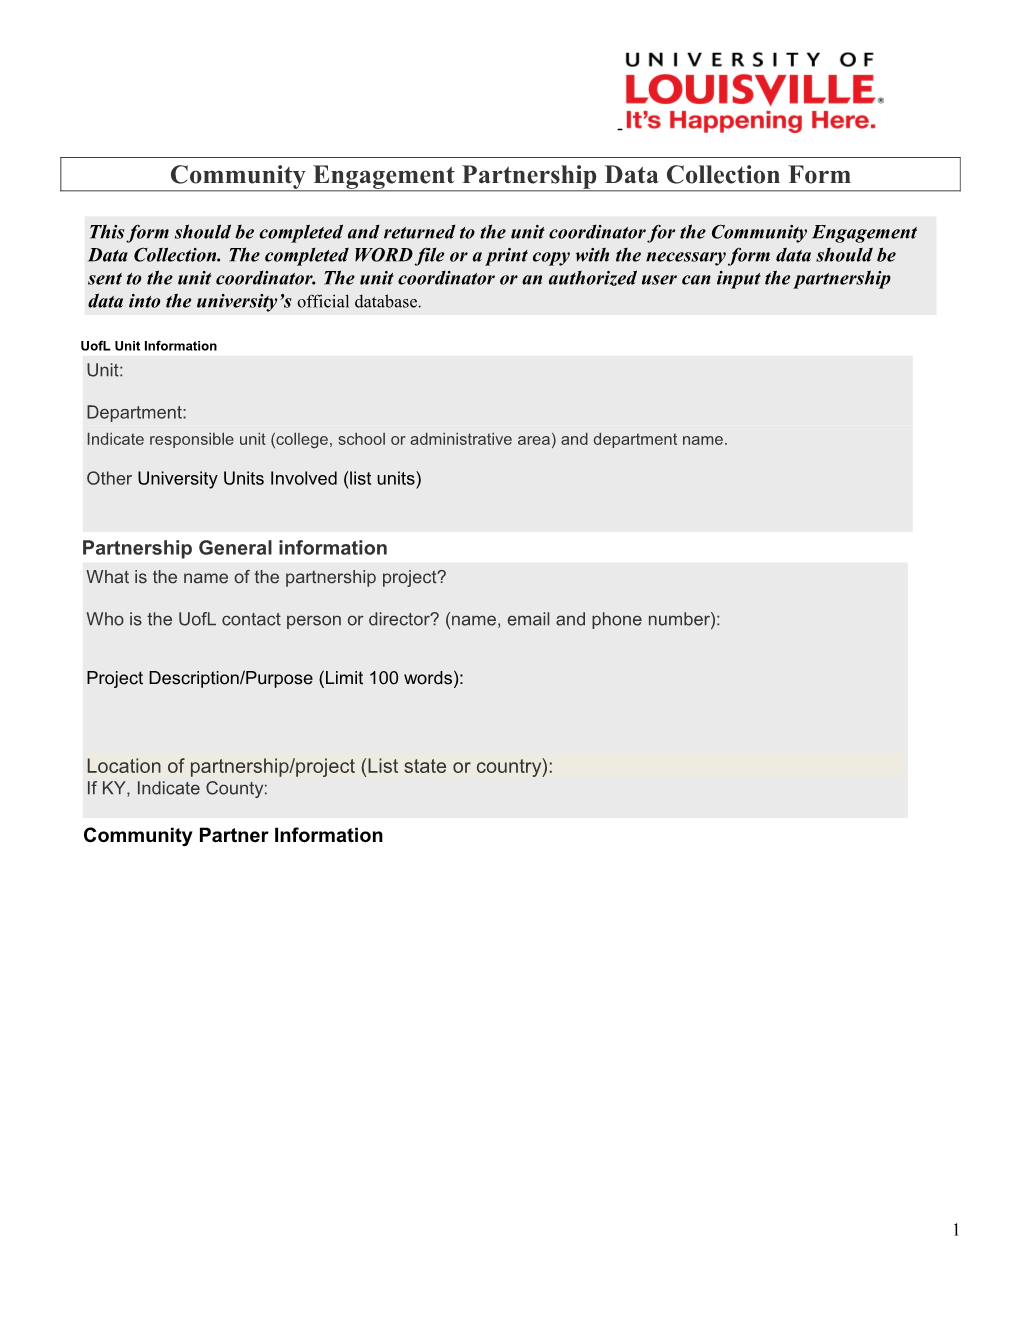 Community Engagement Partnership Data Collection Form